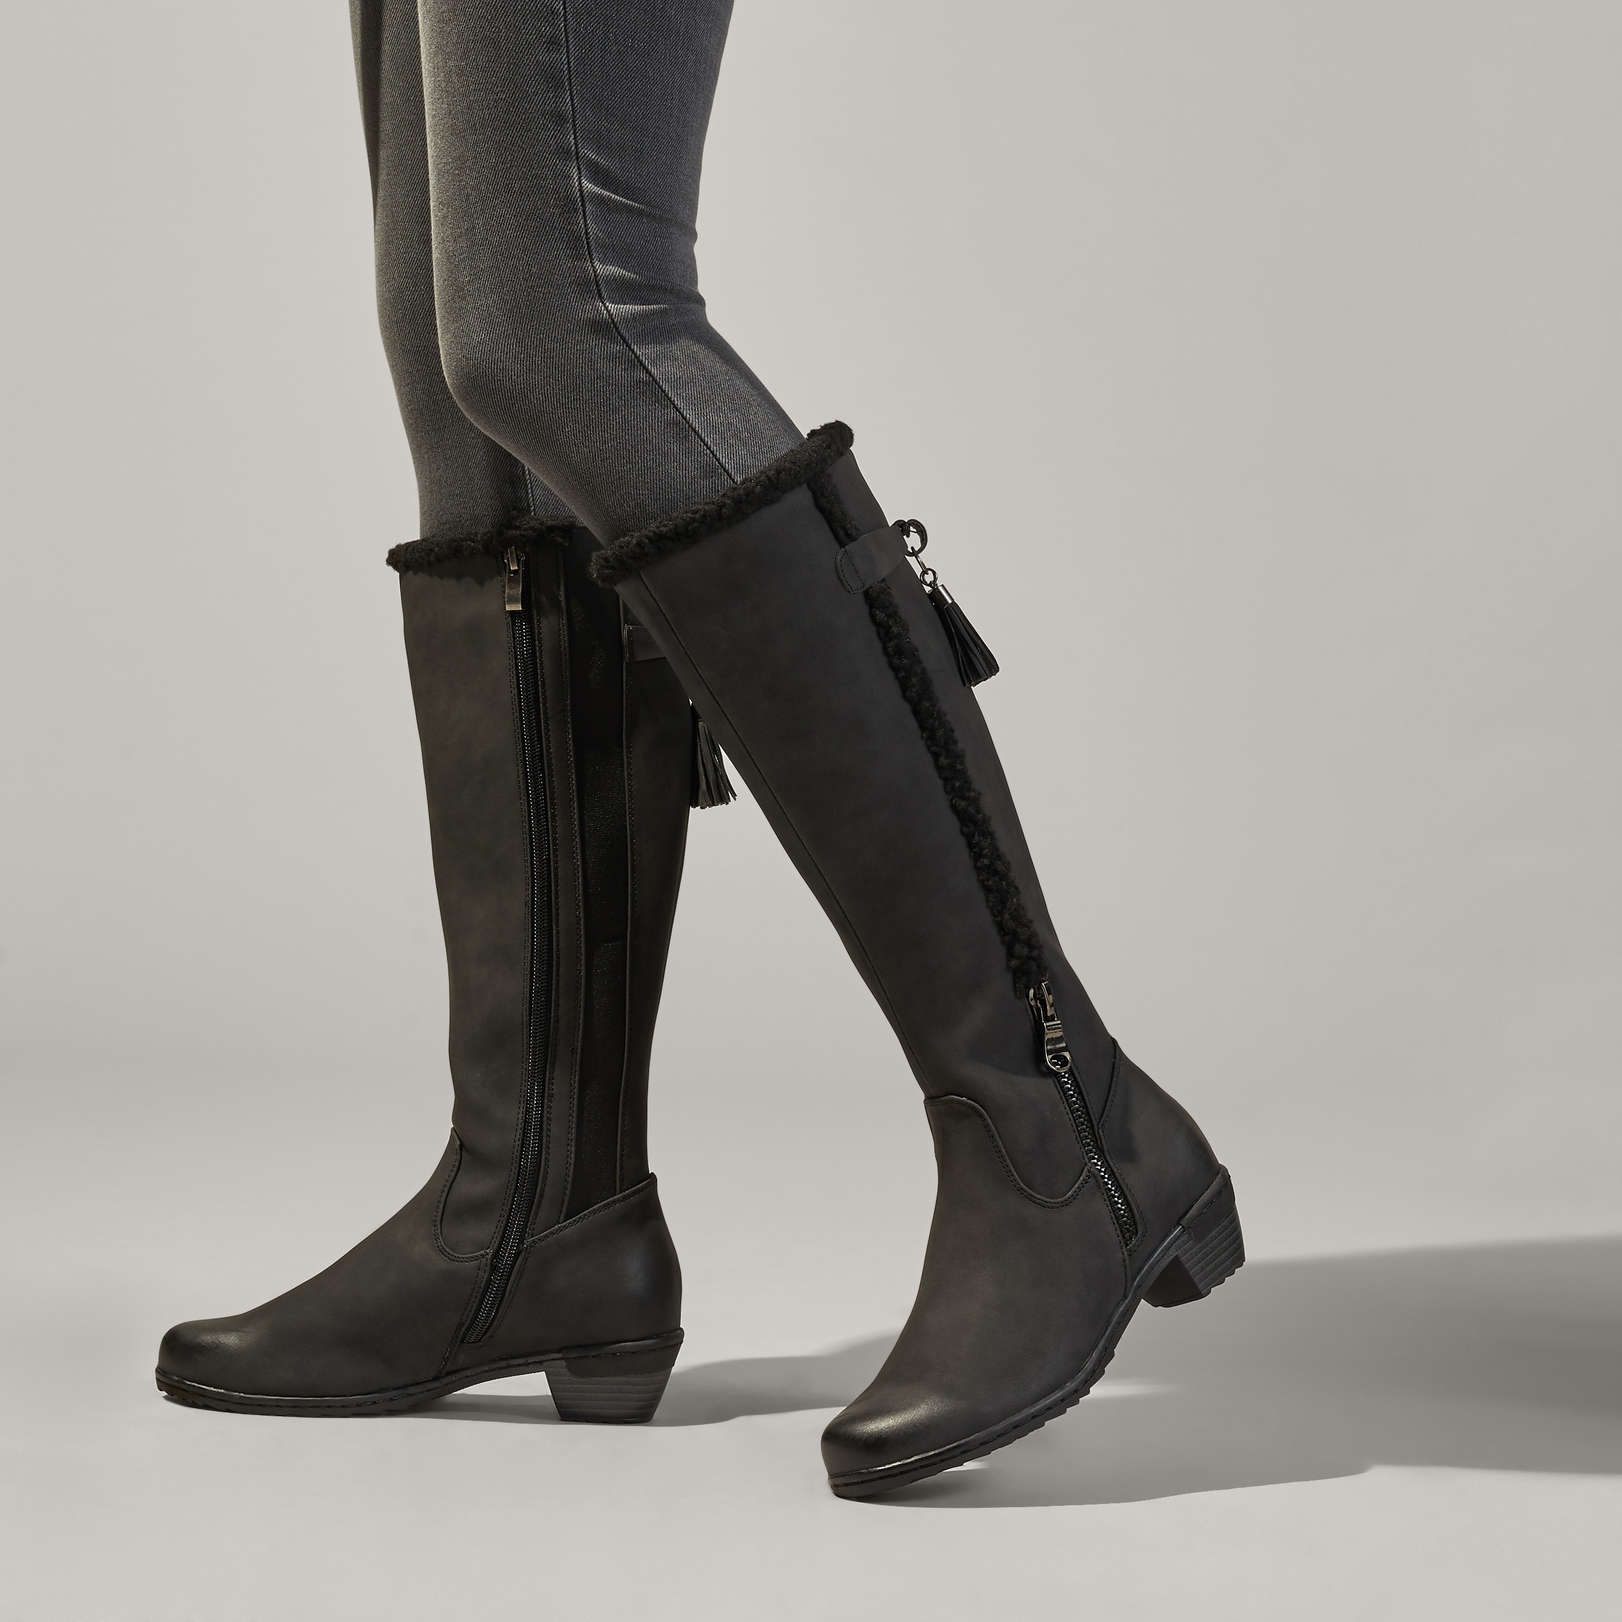 TERRI - CARVELA COMFORT High Leg Boots